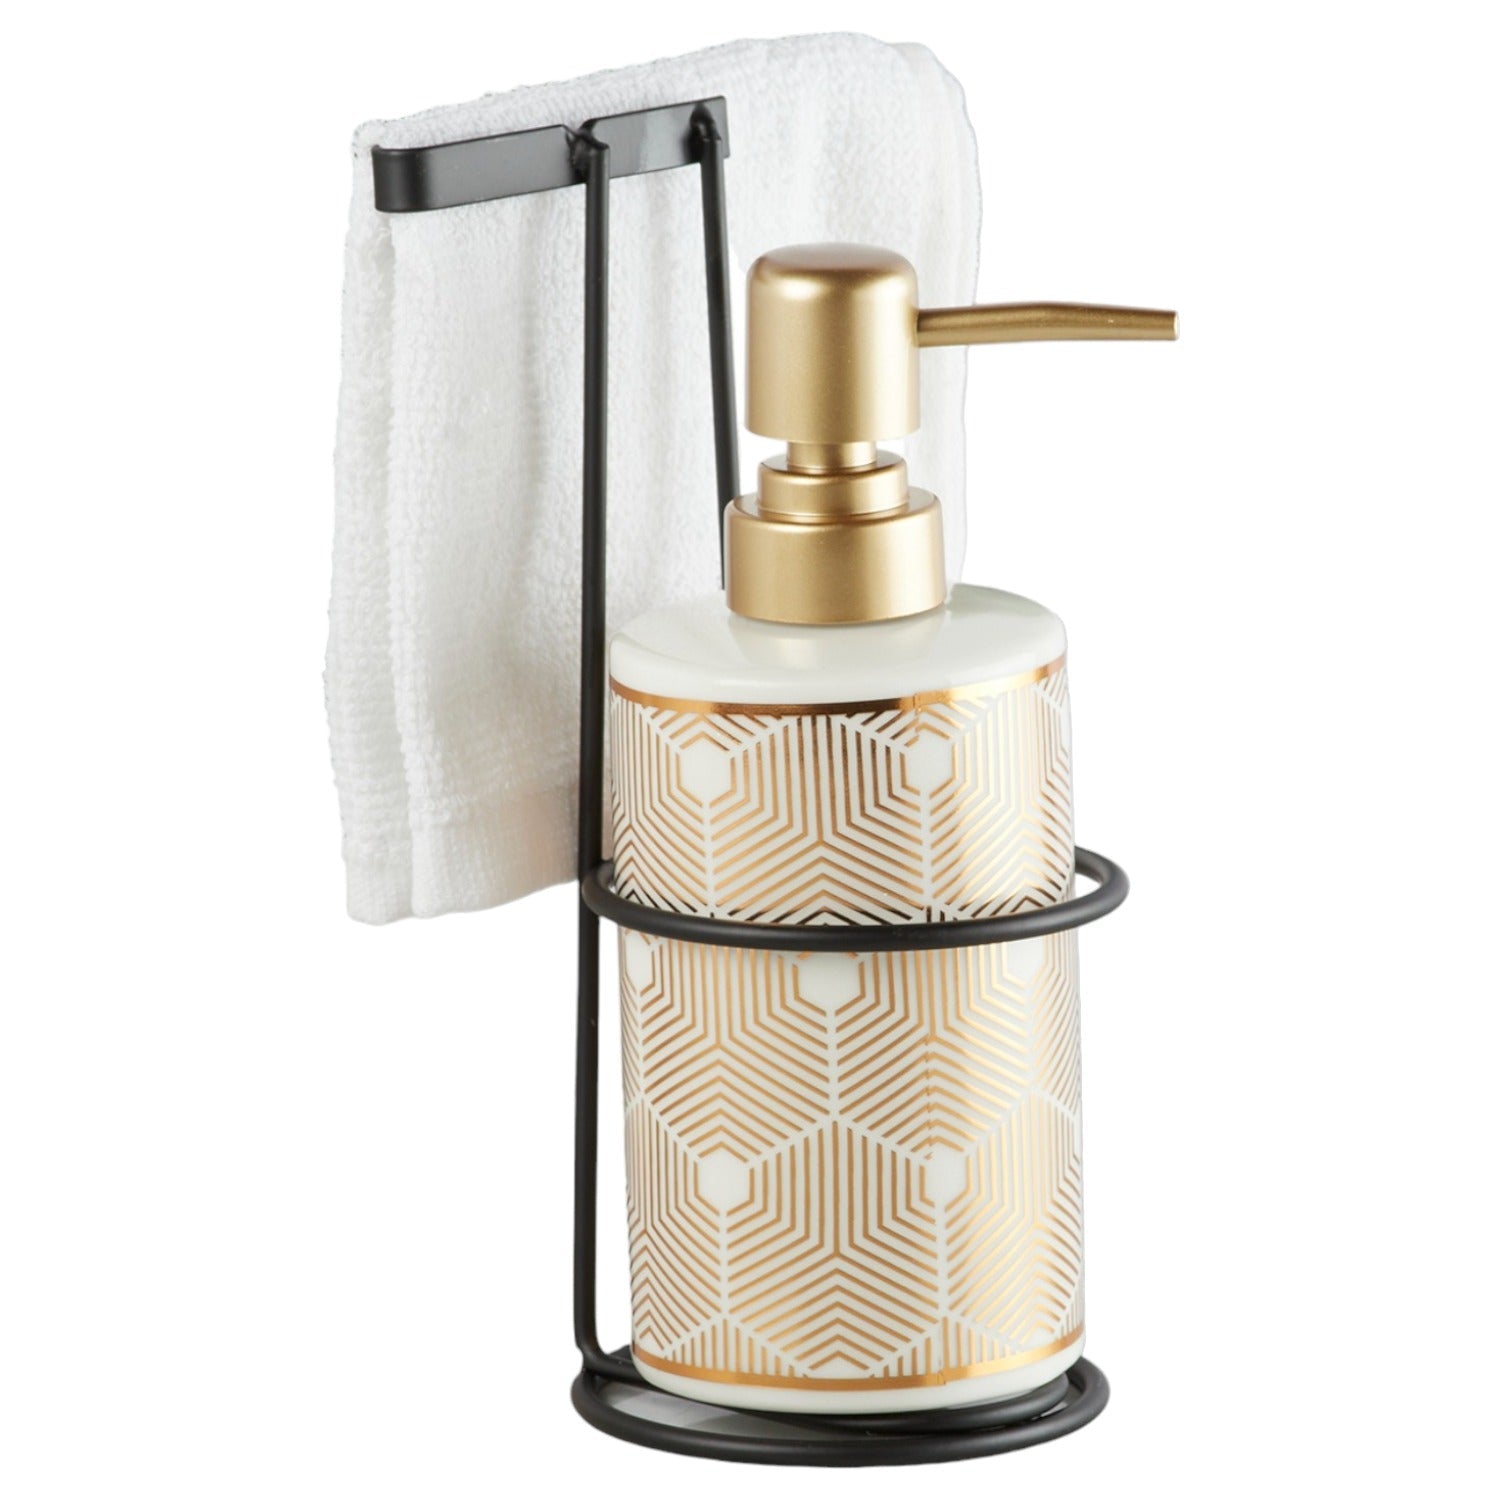 Ceramic Soap Dispenser handwash Pump for Bathroom, Set of 1, White/Gold (10294)